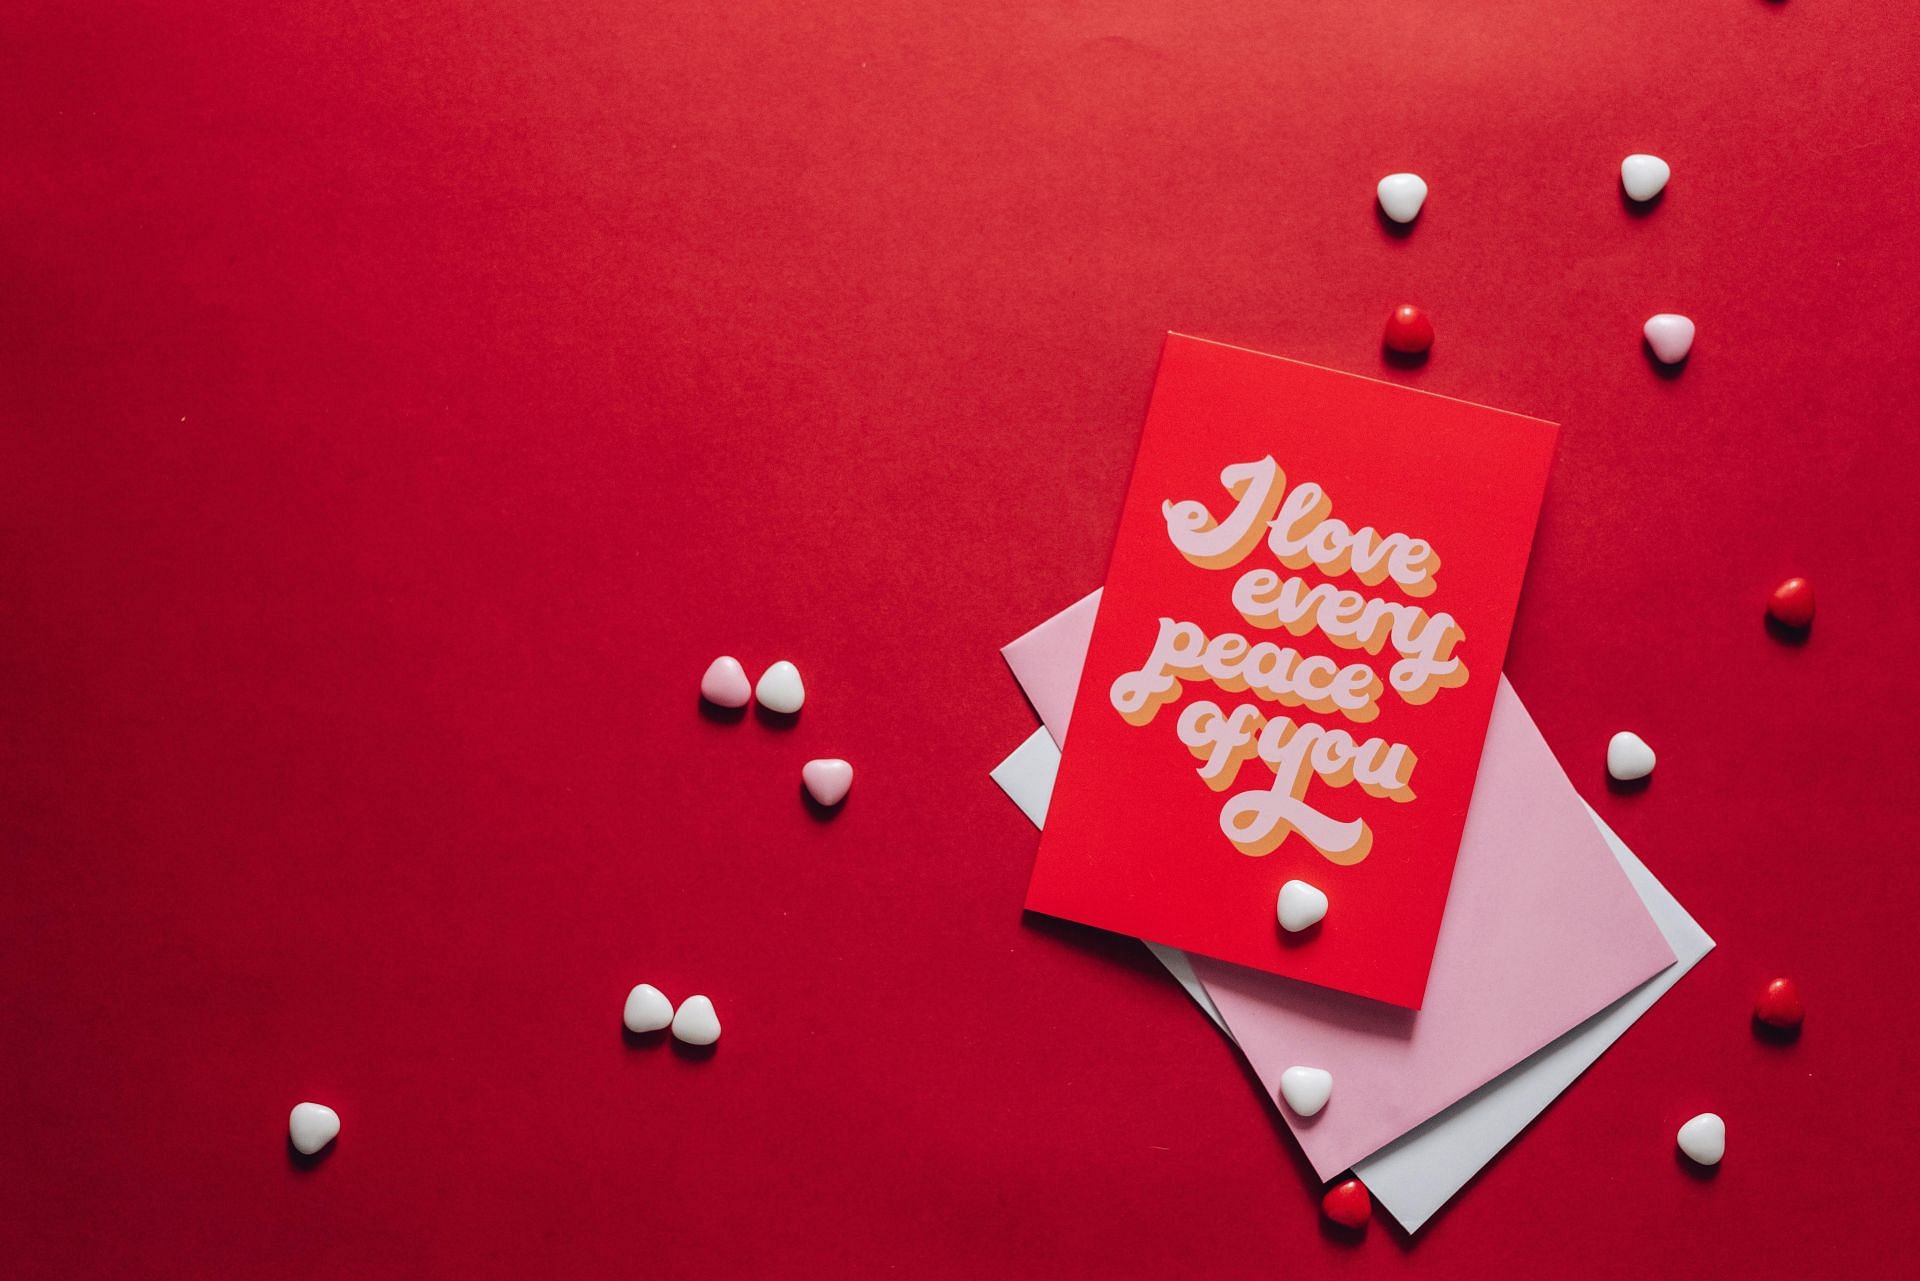 I love you Card (Image via Pexels)